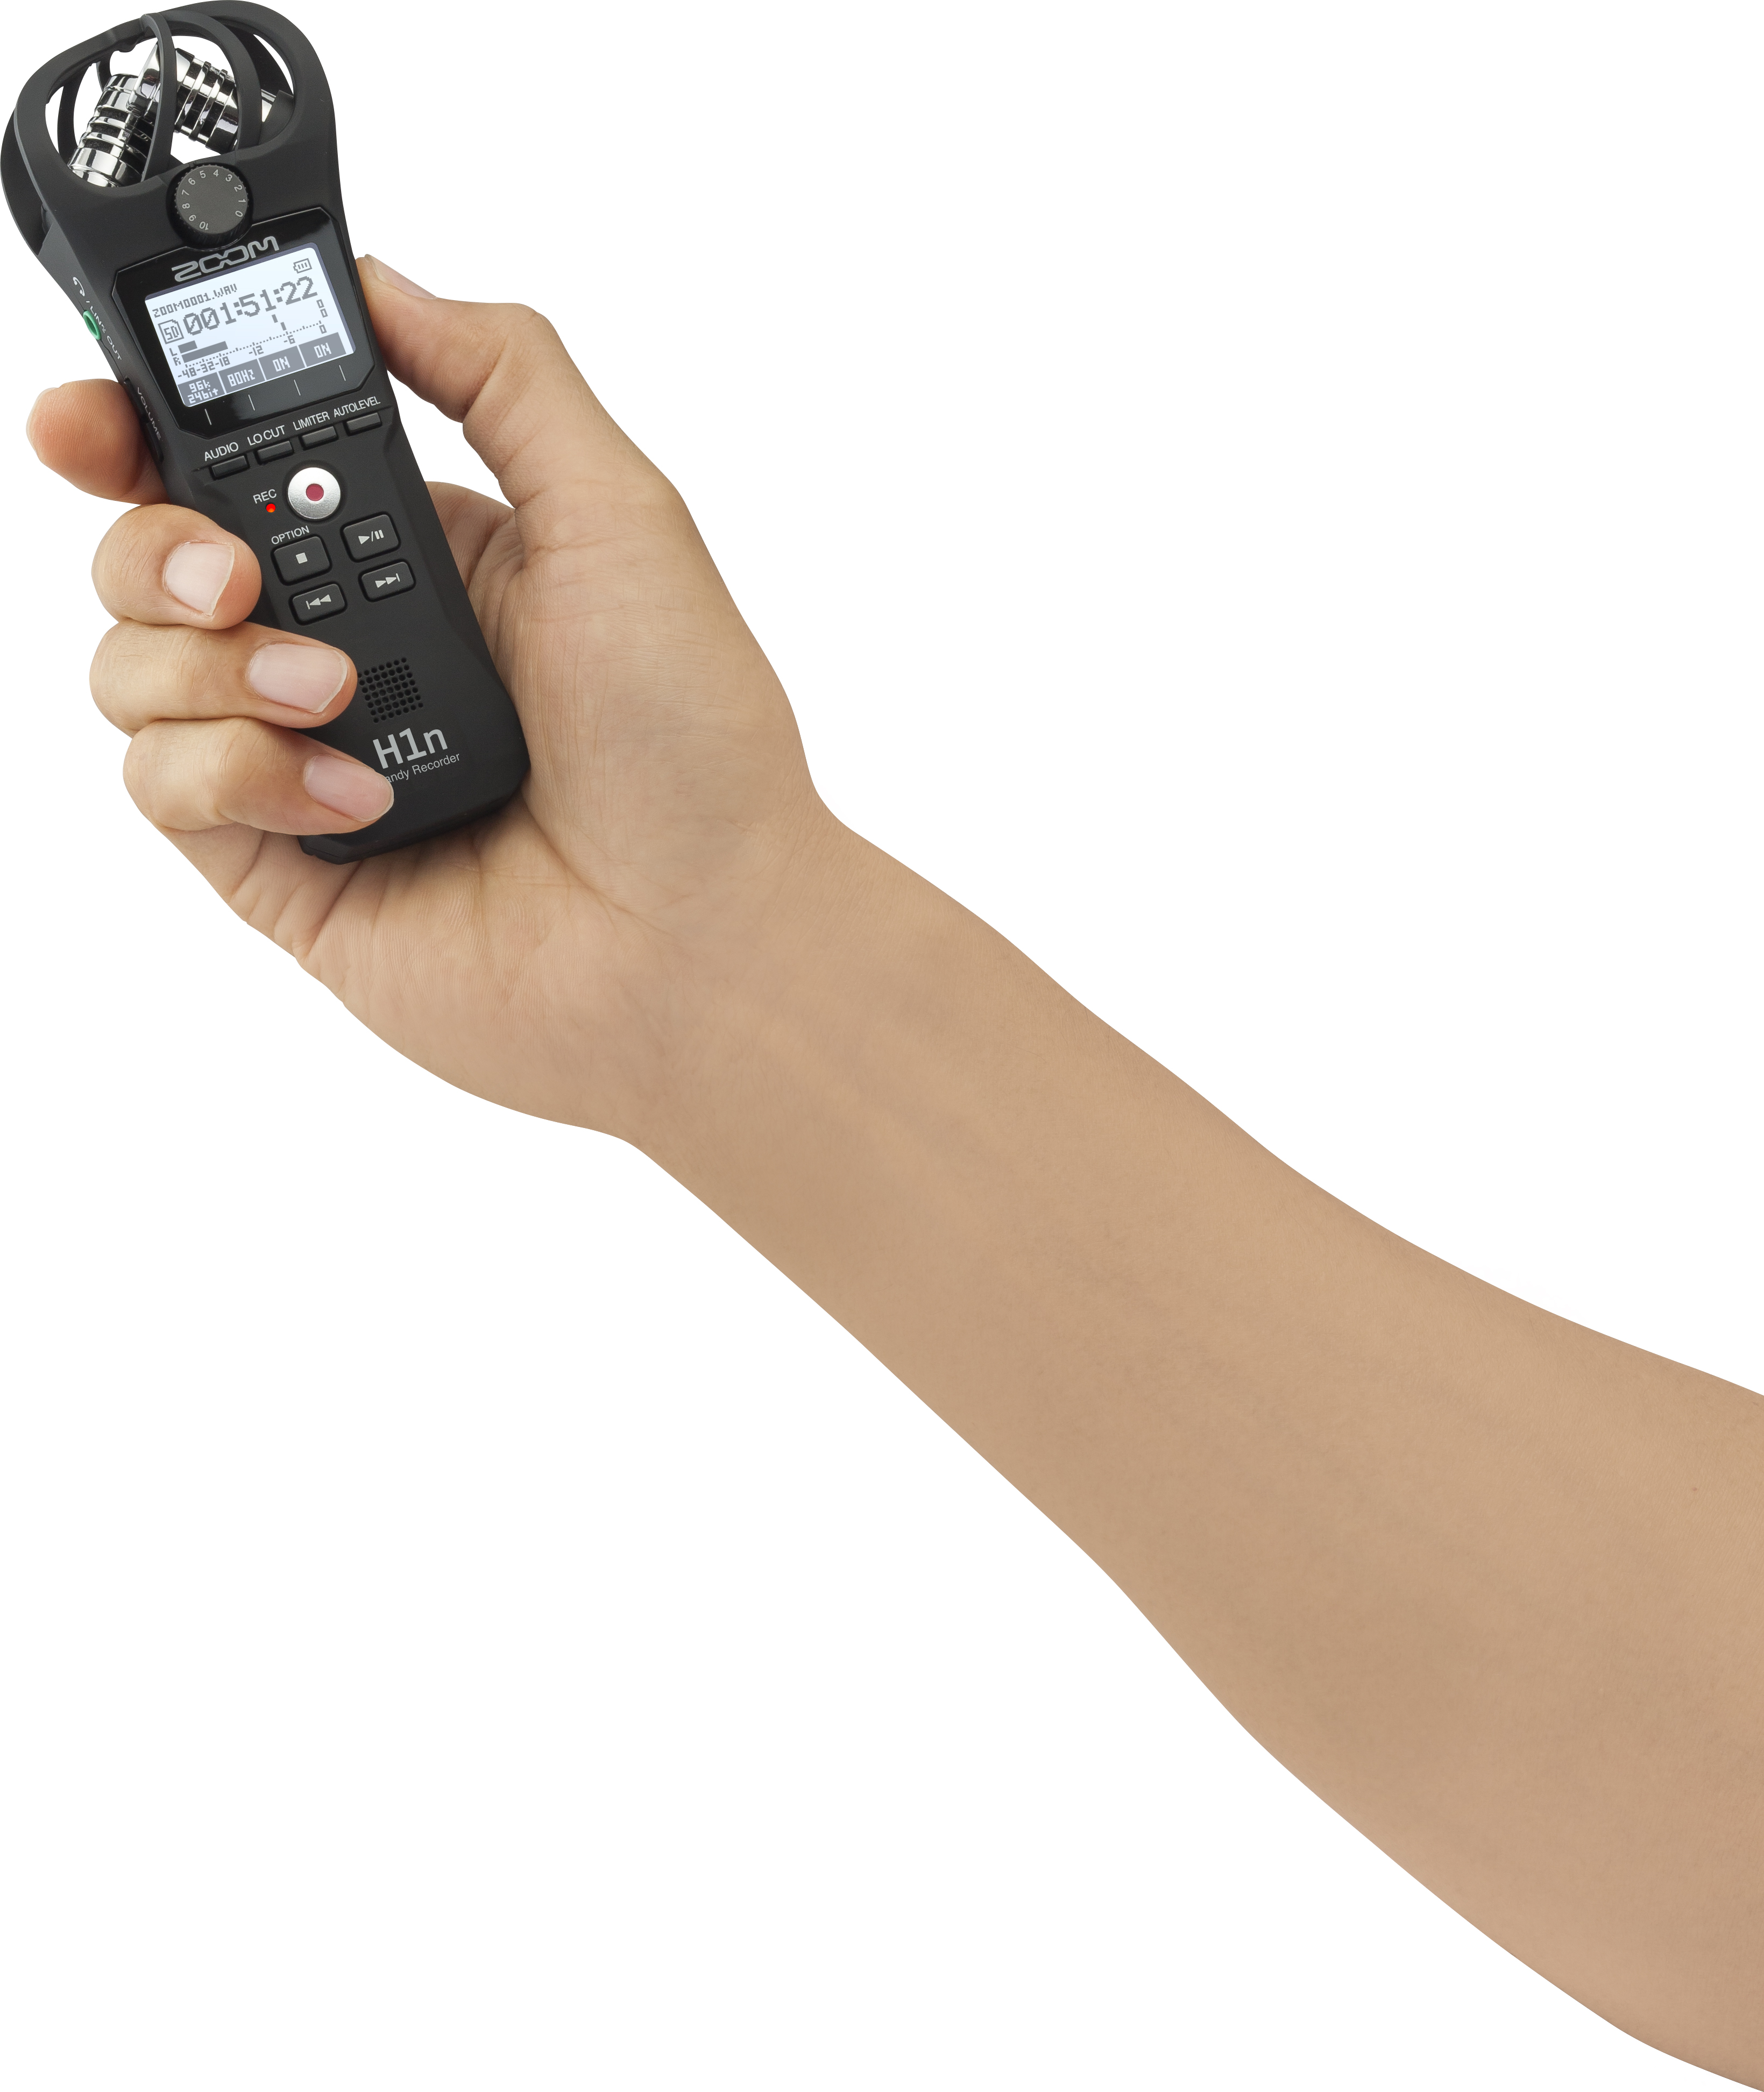 Zoom H1n - Portable recorder - Variation 3